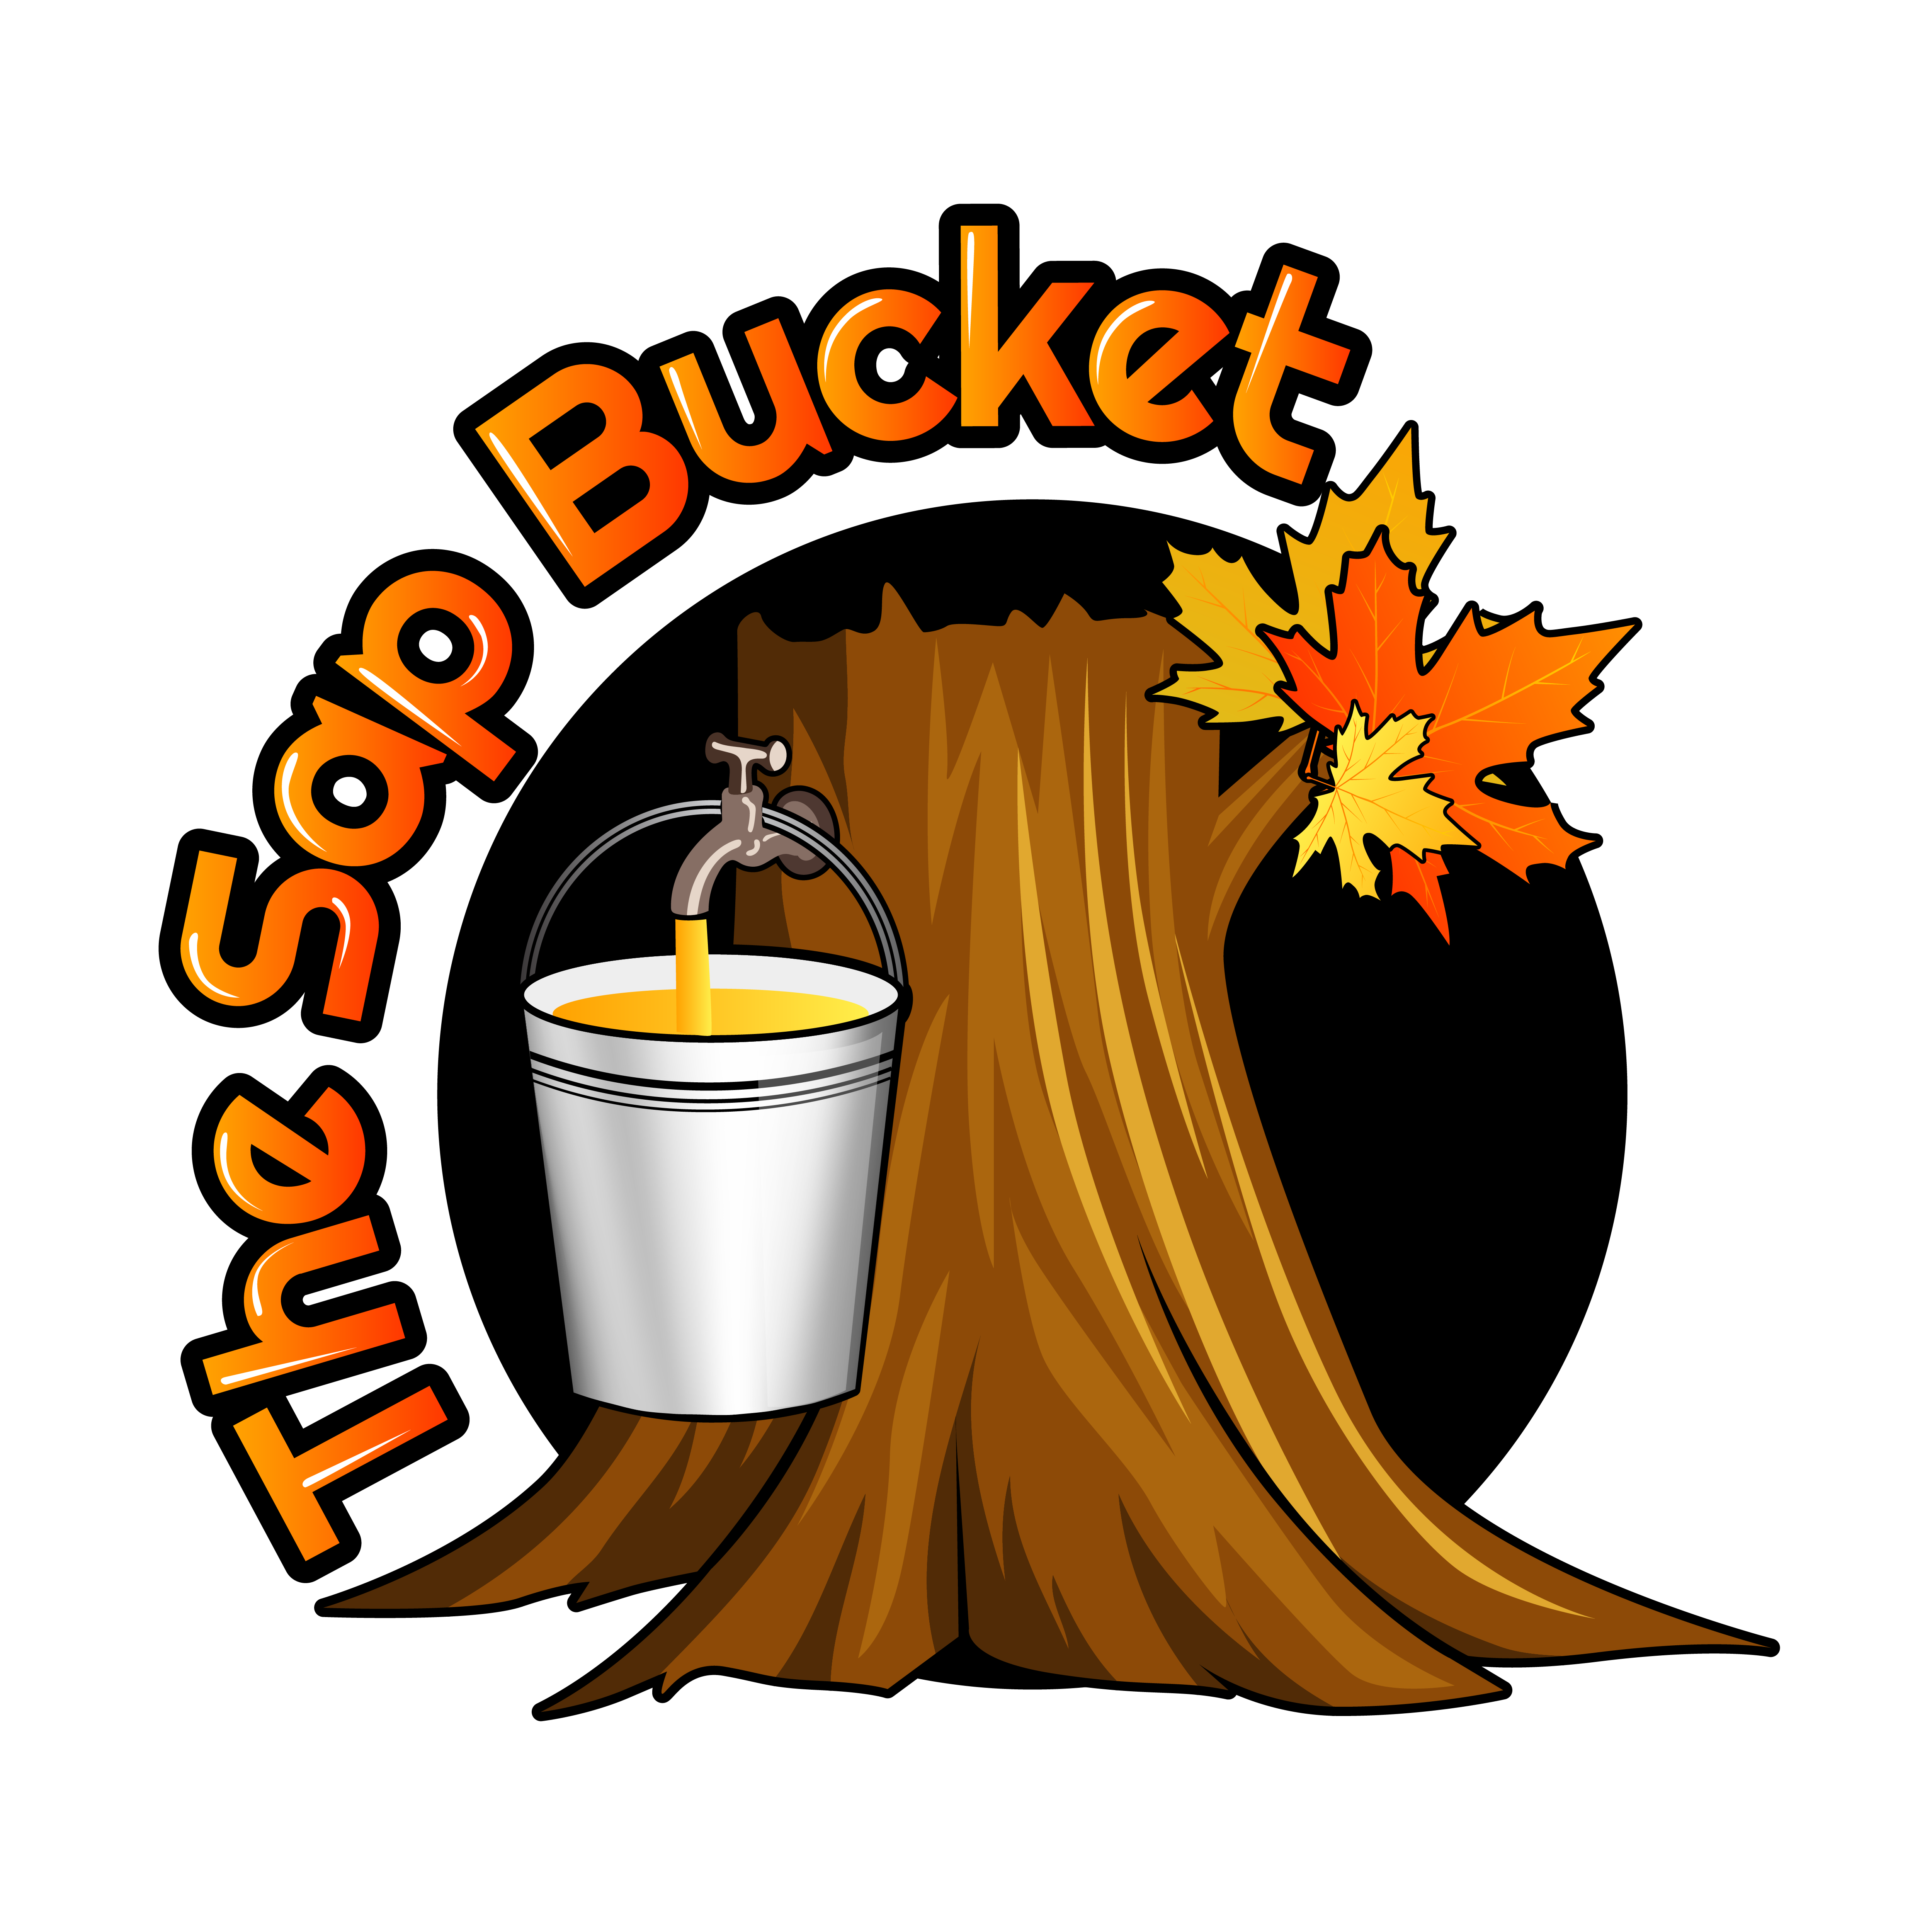 The Sap Bucket